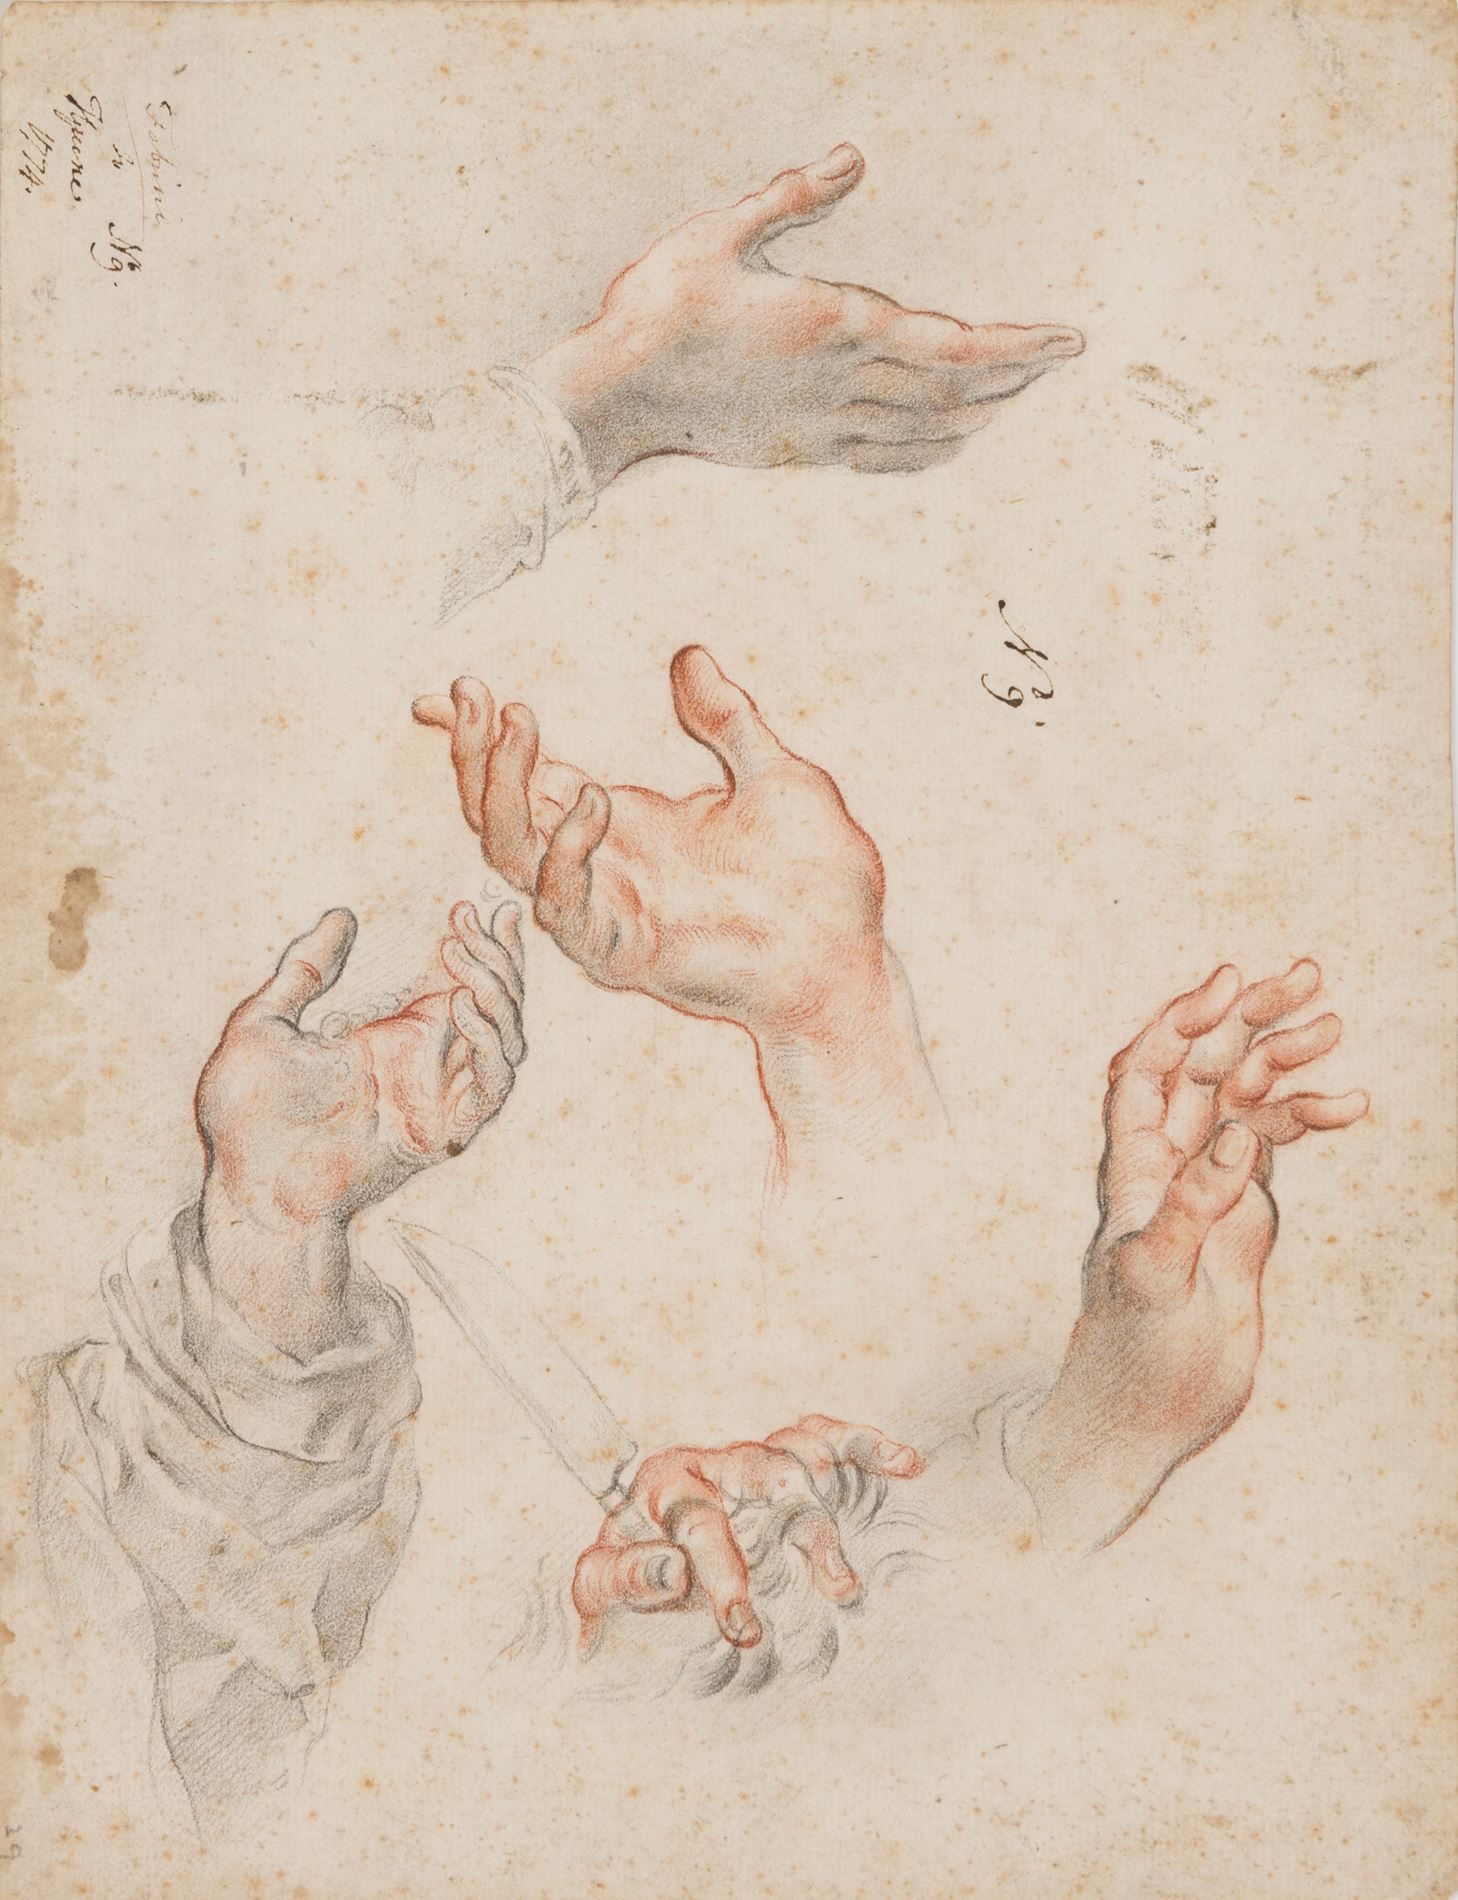 Cristofano ALLORI (Florence 1577 - Florence 1621) - A Sheet